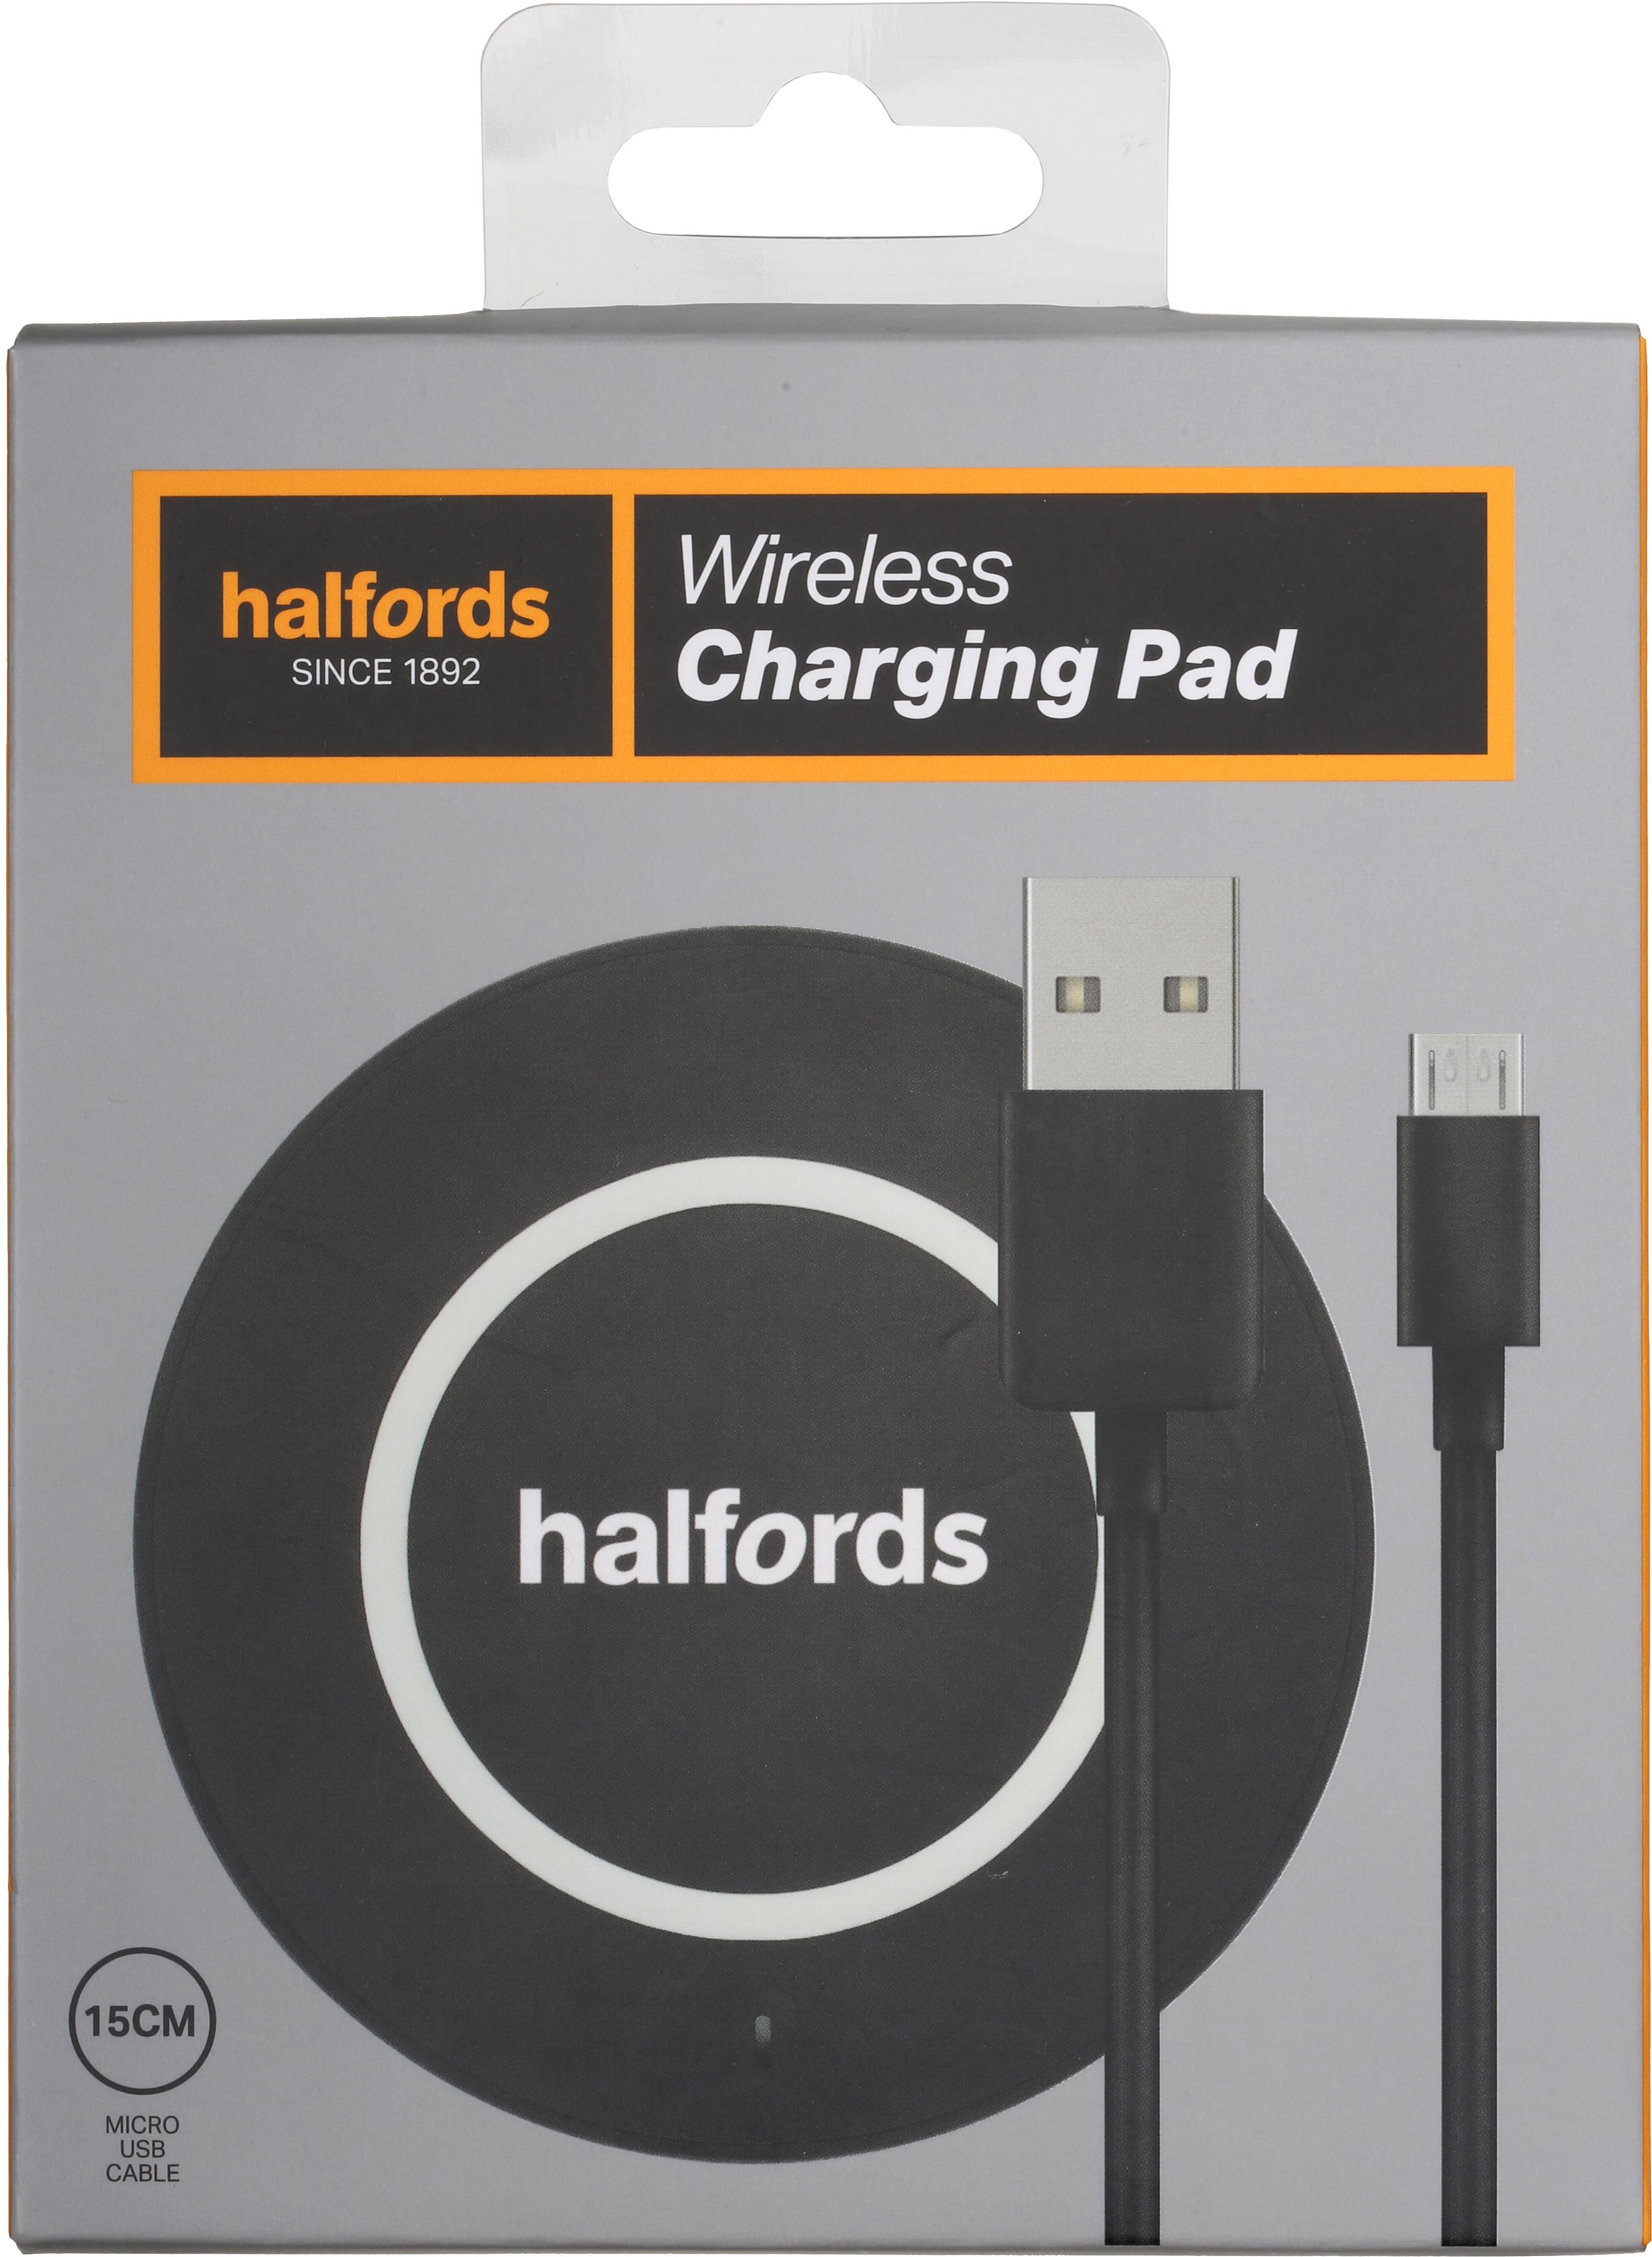 Halfords Wireless Charging Pad 10W, Black